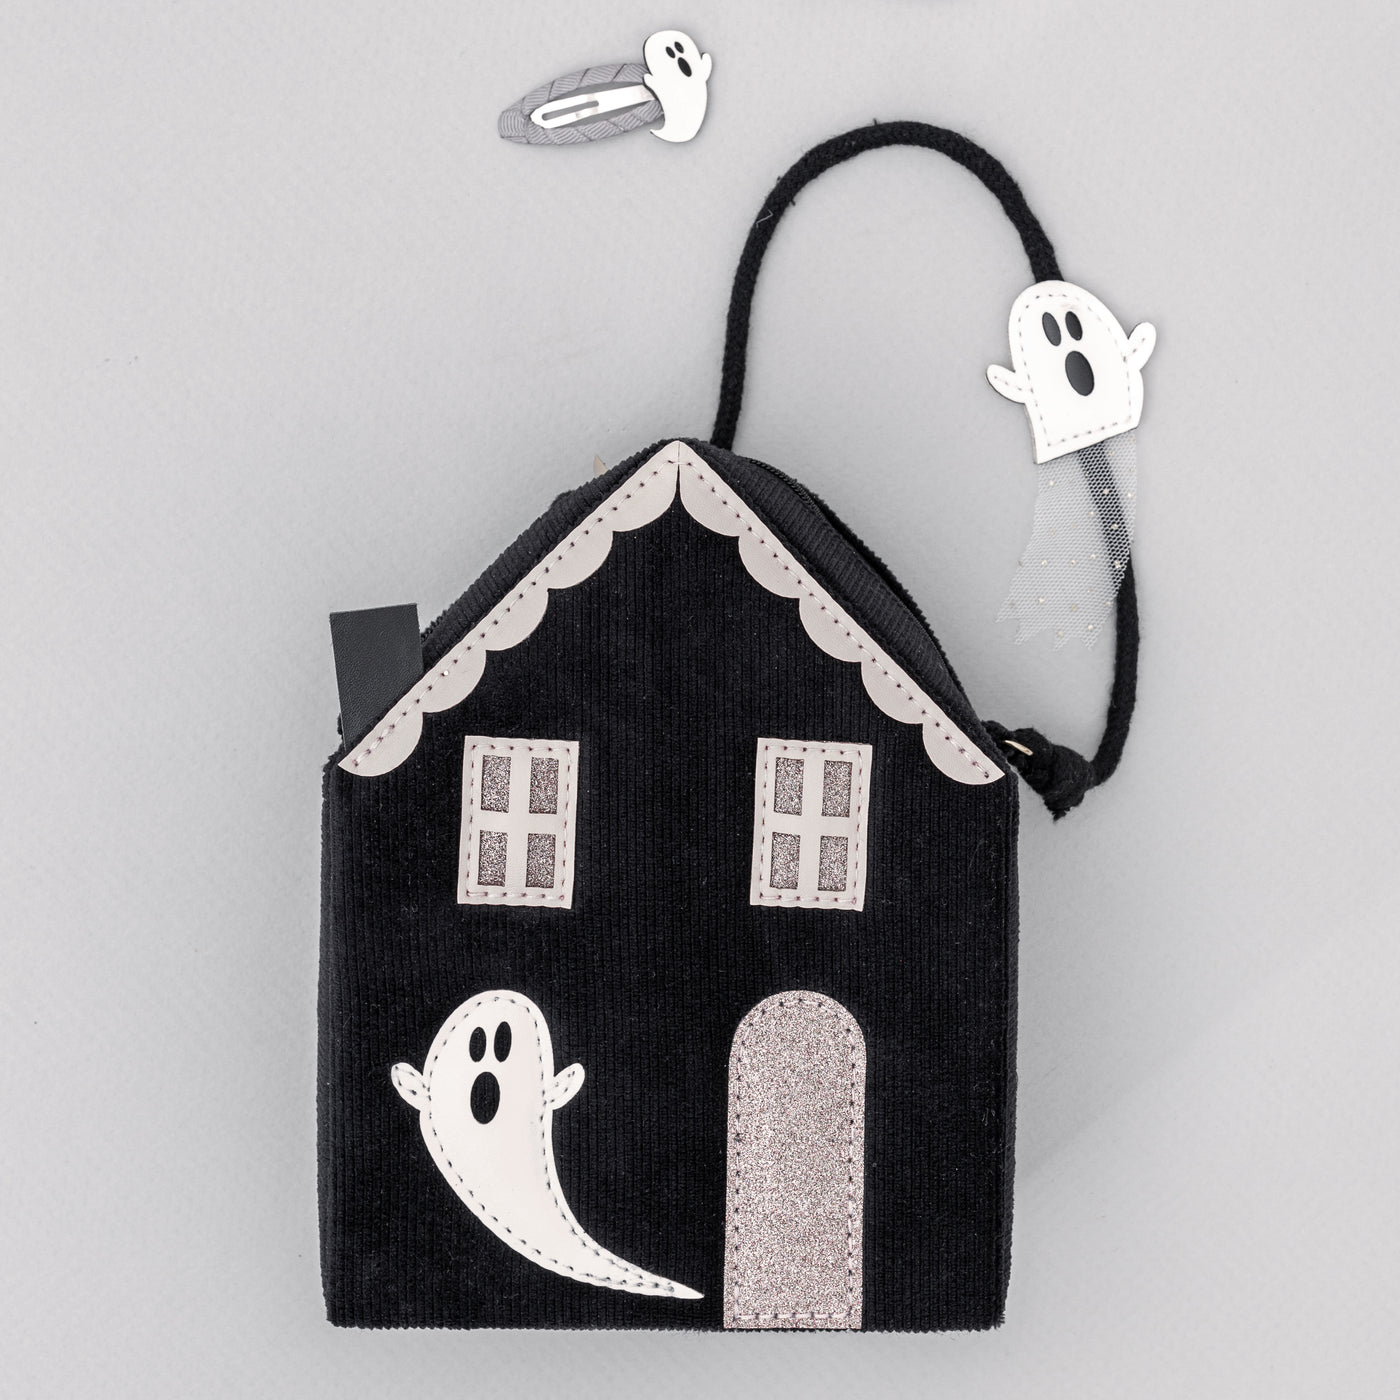 Haunted house bag